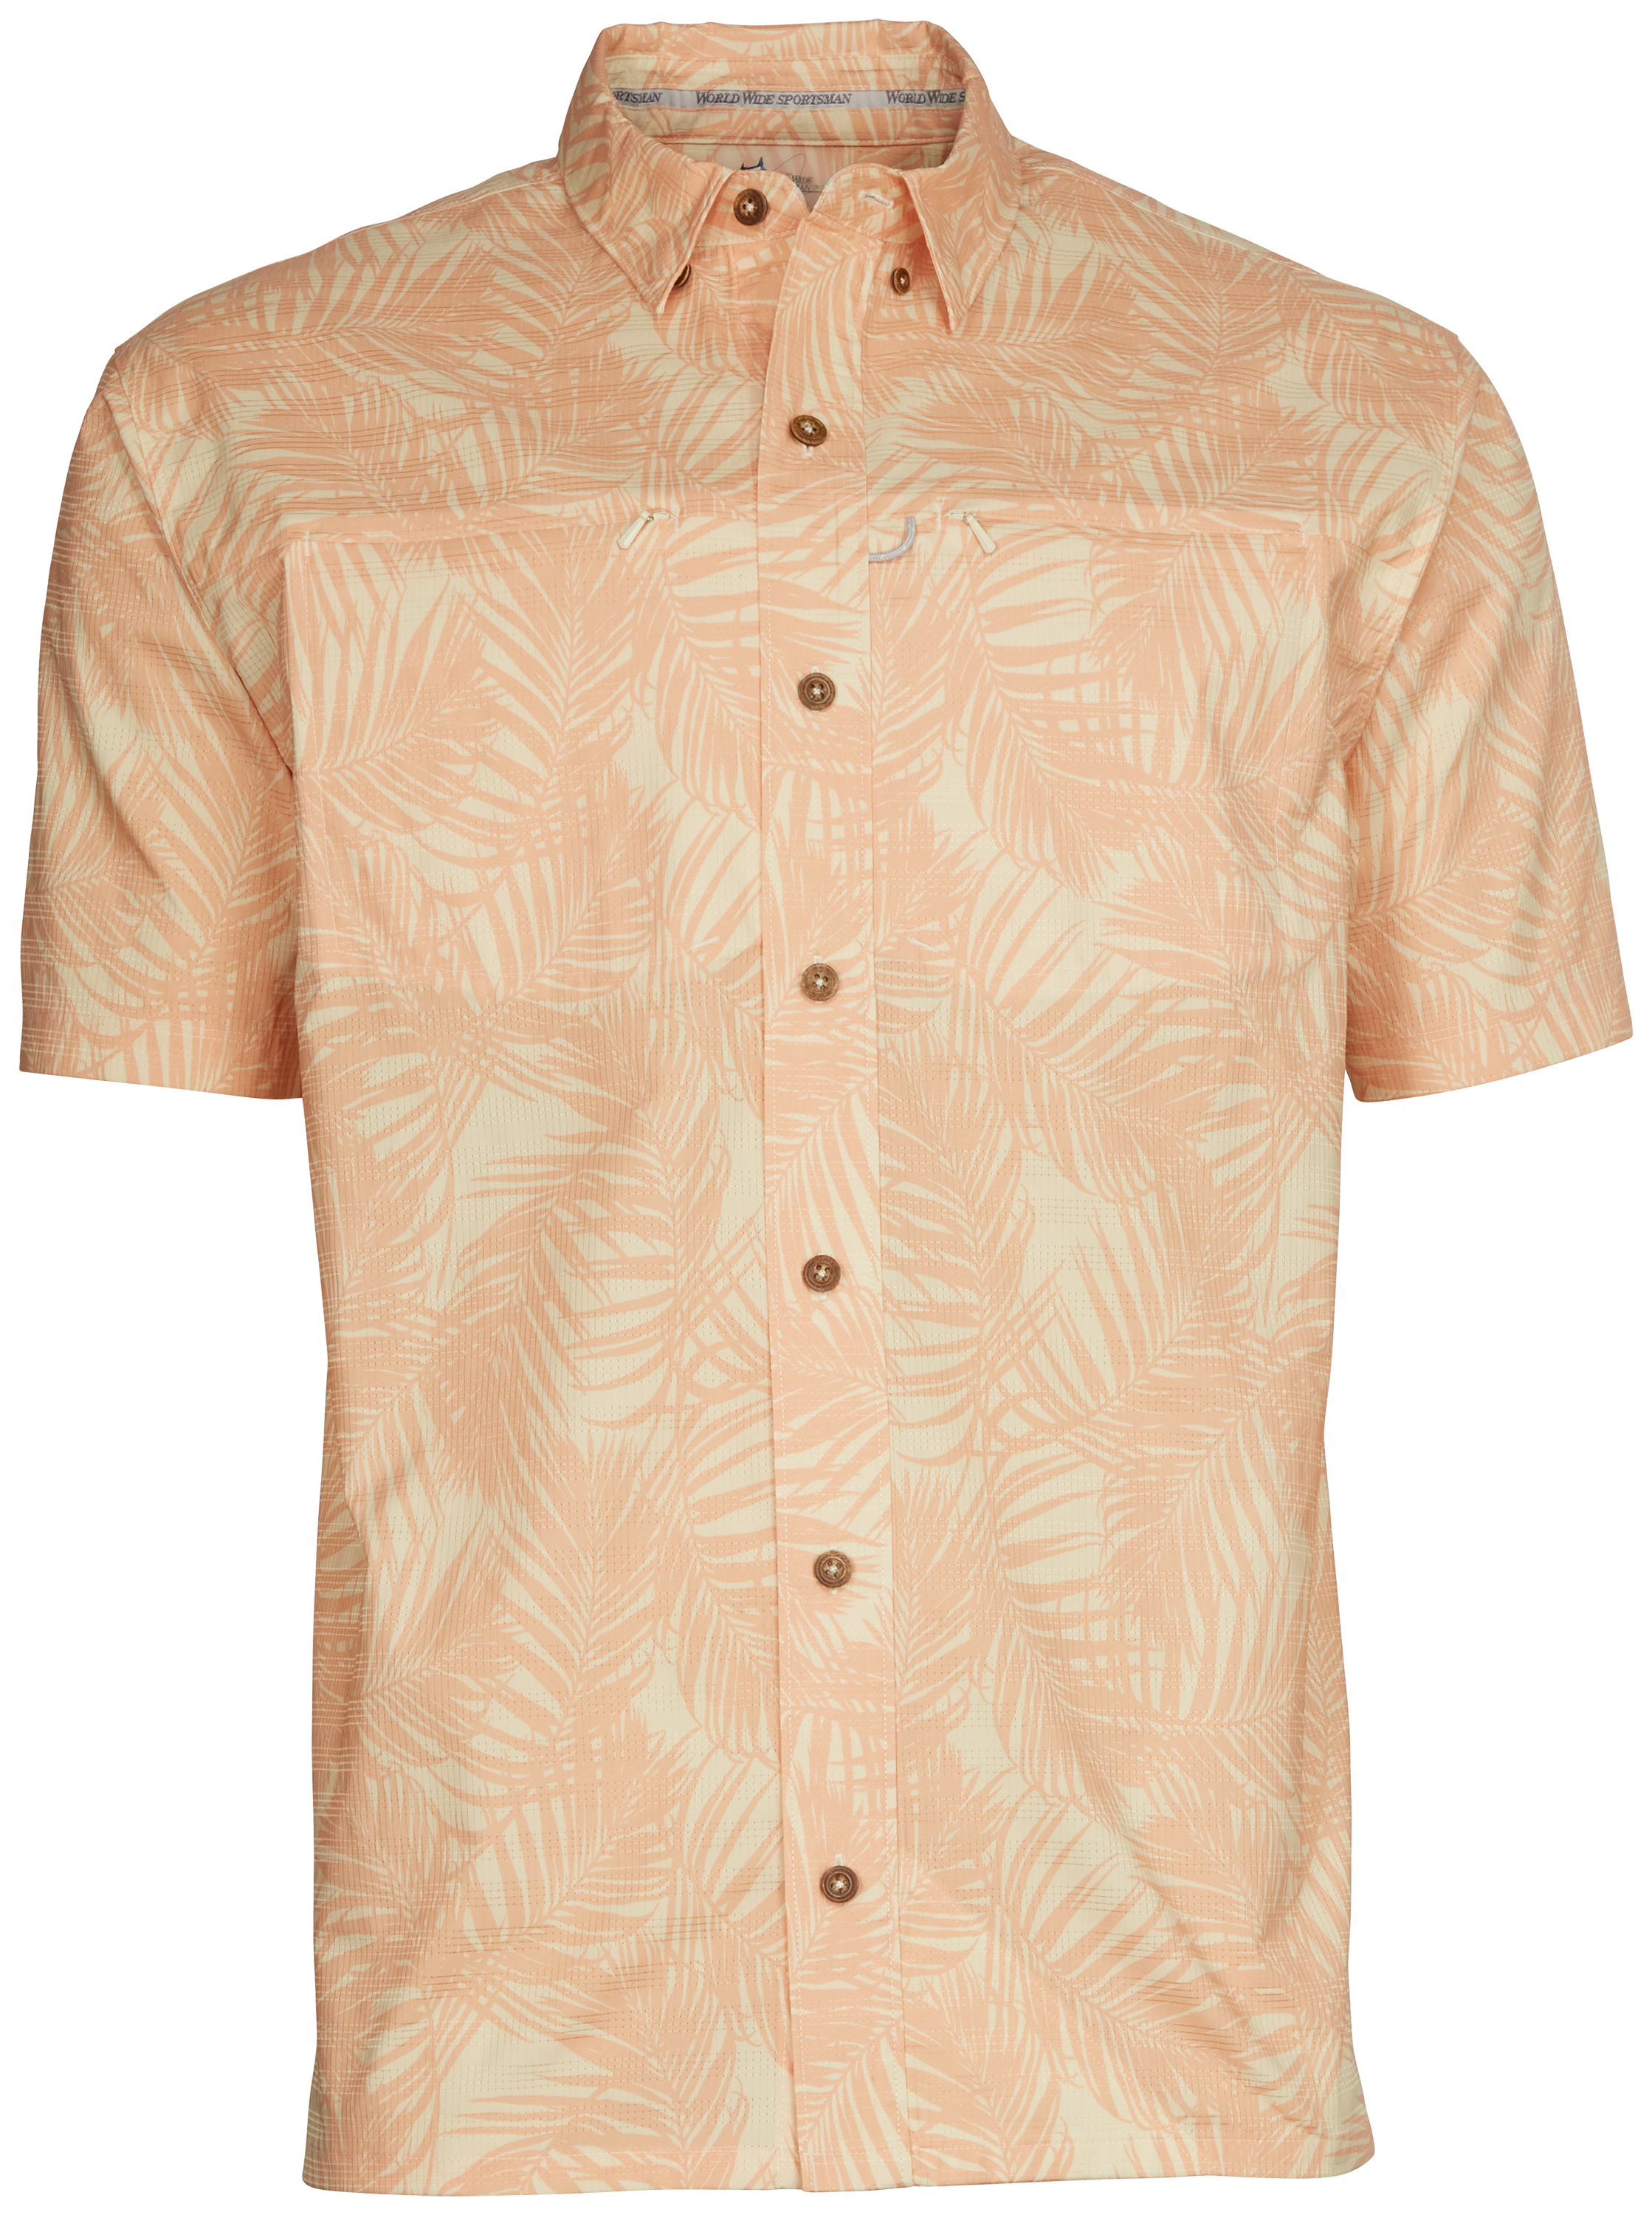 World Wide Sportsman Seacrest Print Short-Sleeve Button-Down Shirt for Men - Apricot Palms - XL